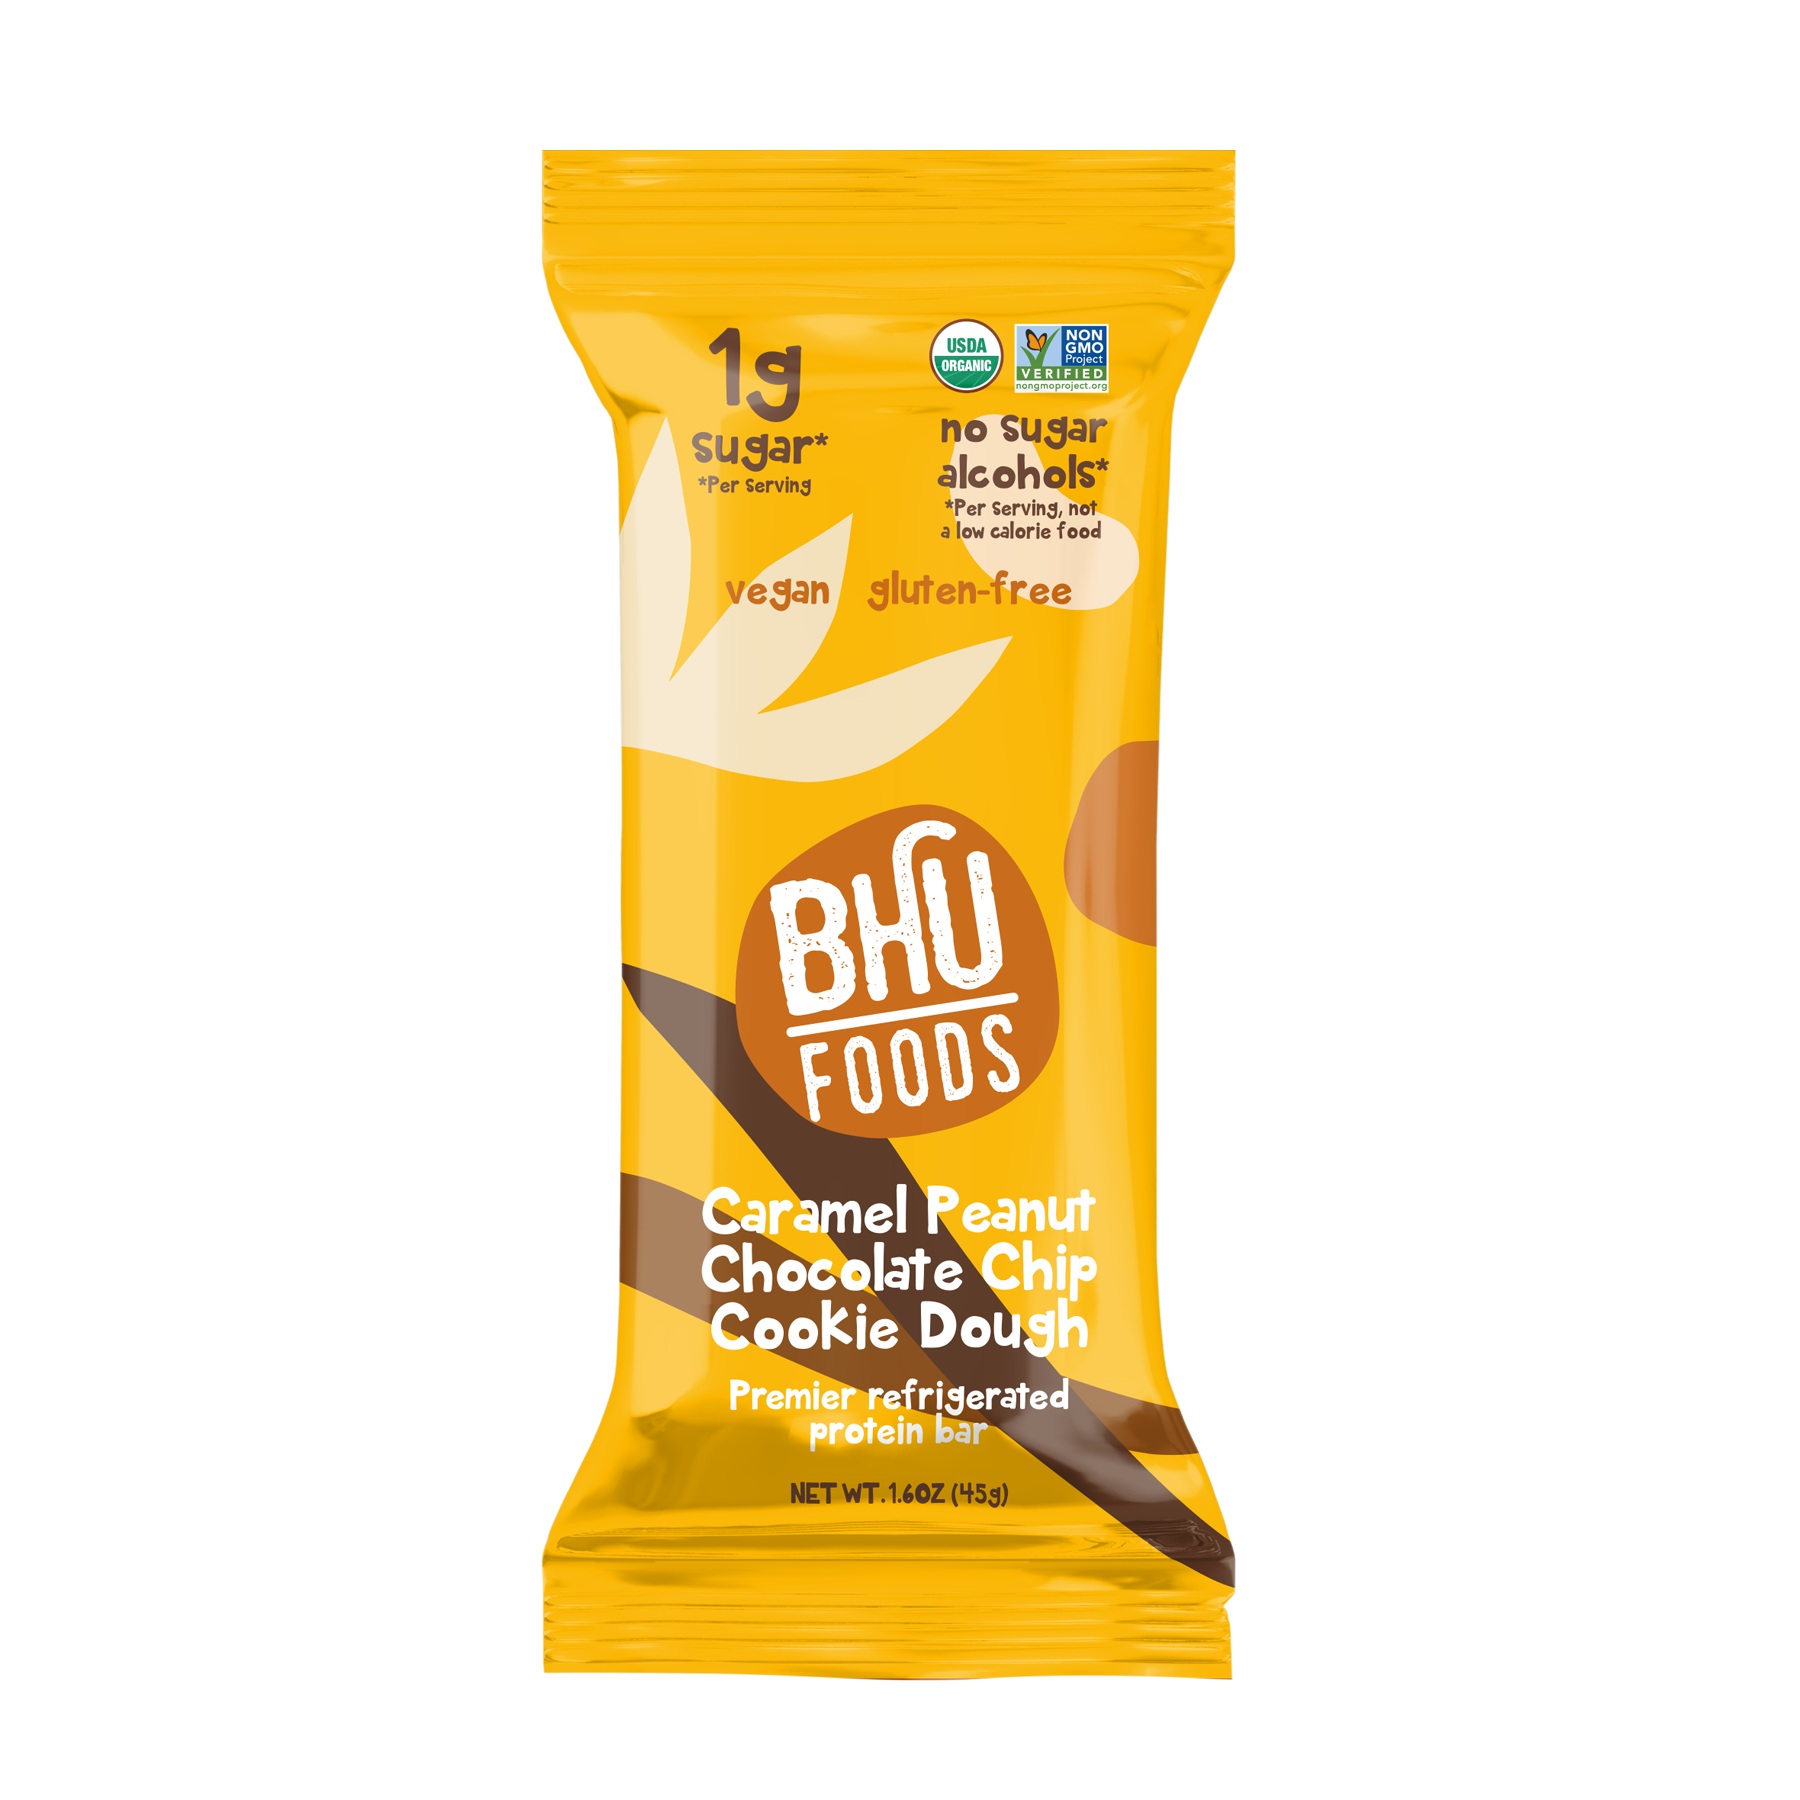 BHU Foods Premier Refrigerated Protein Bar - Caramel Peanut Chocolate Chip Cookie Dough 12 innerpacks per case 12.8 oz